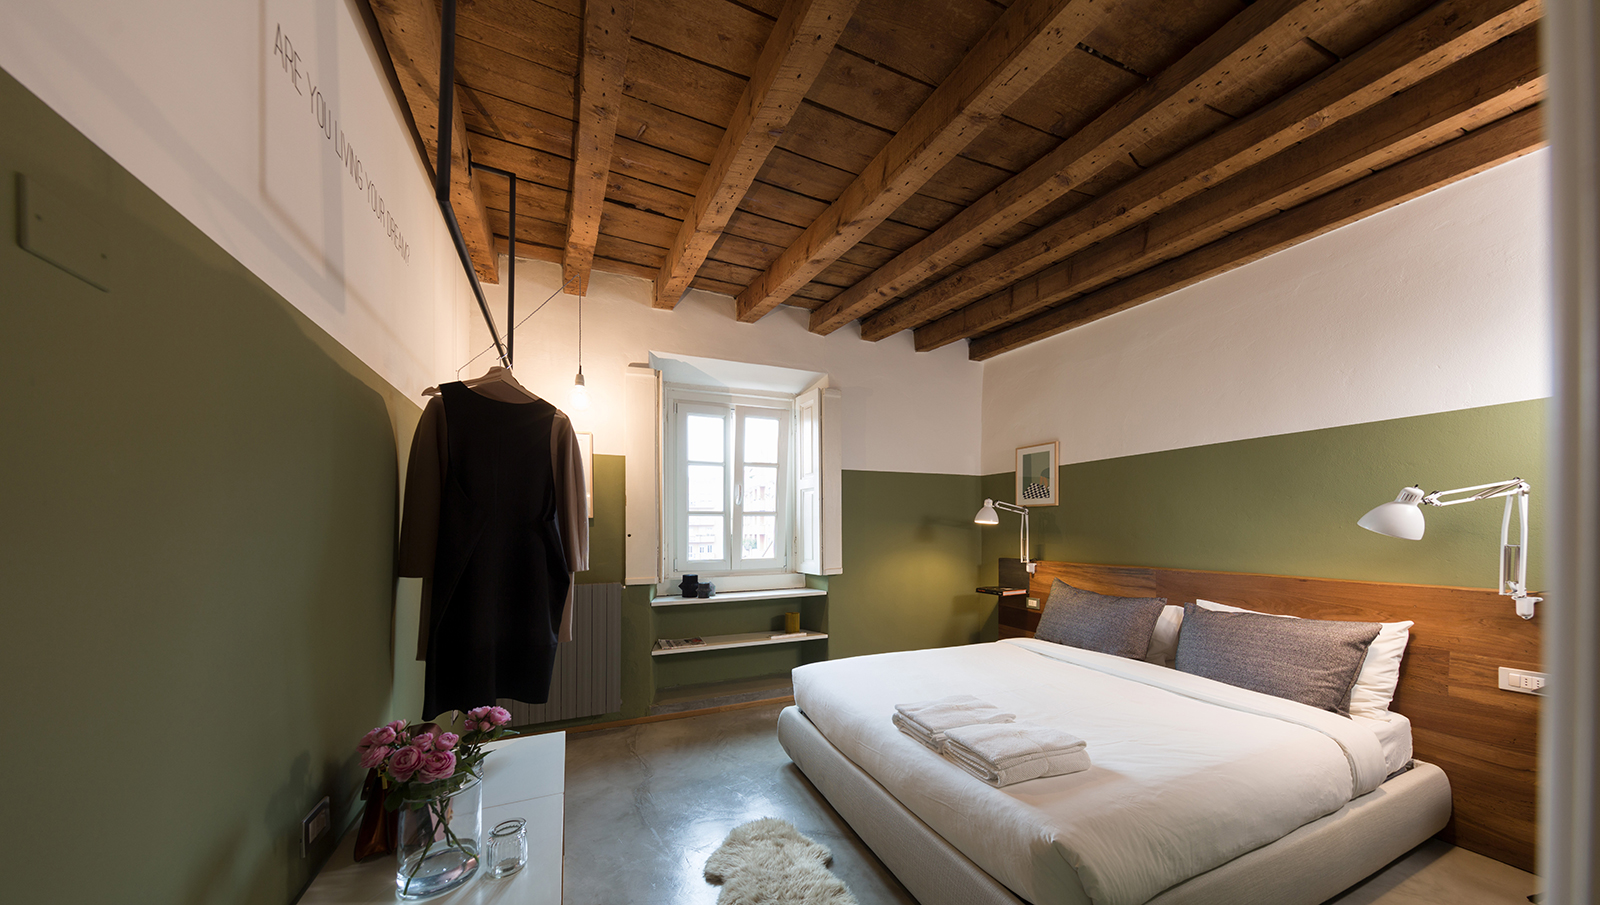 Milan aparment for rent: Artist's loft by onstanza Cecchini